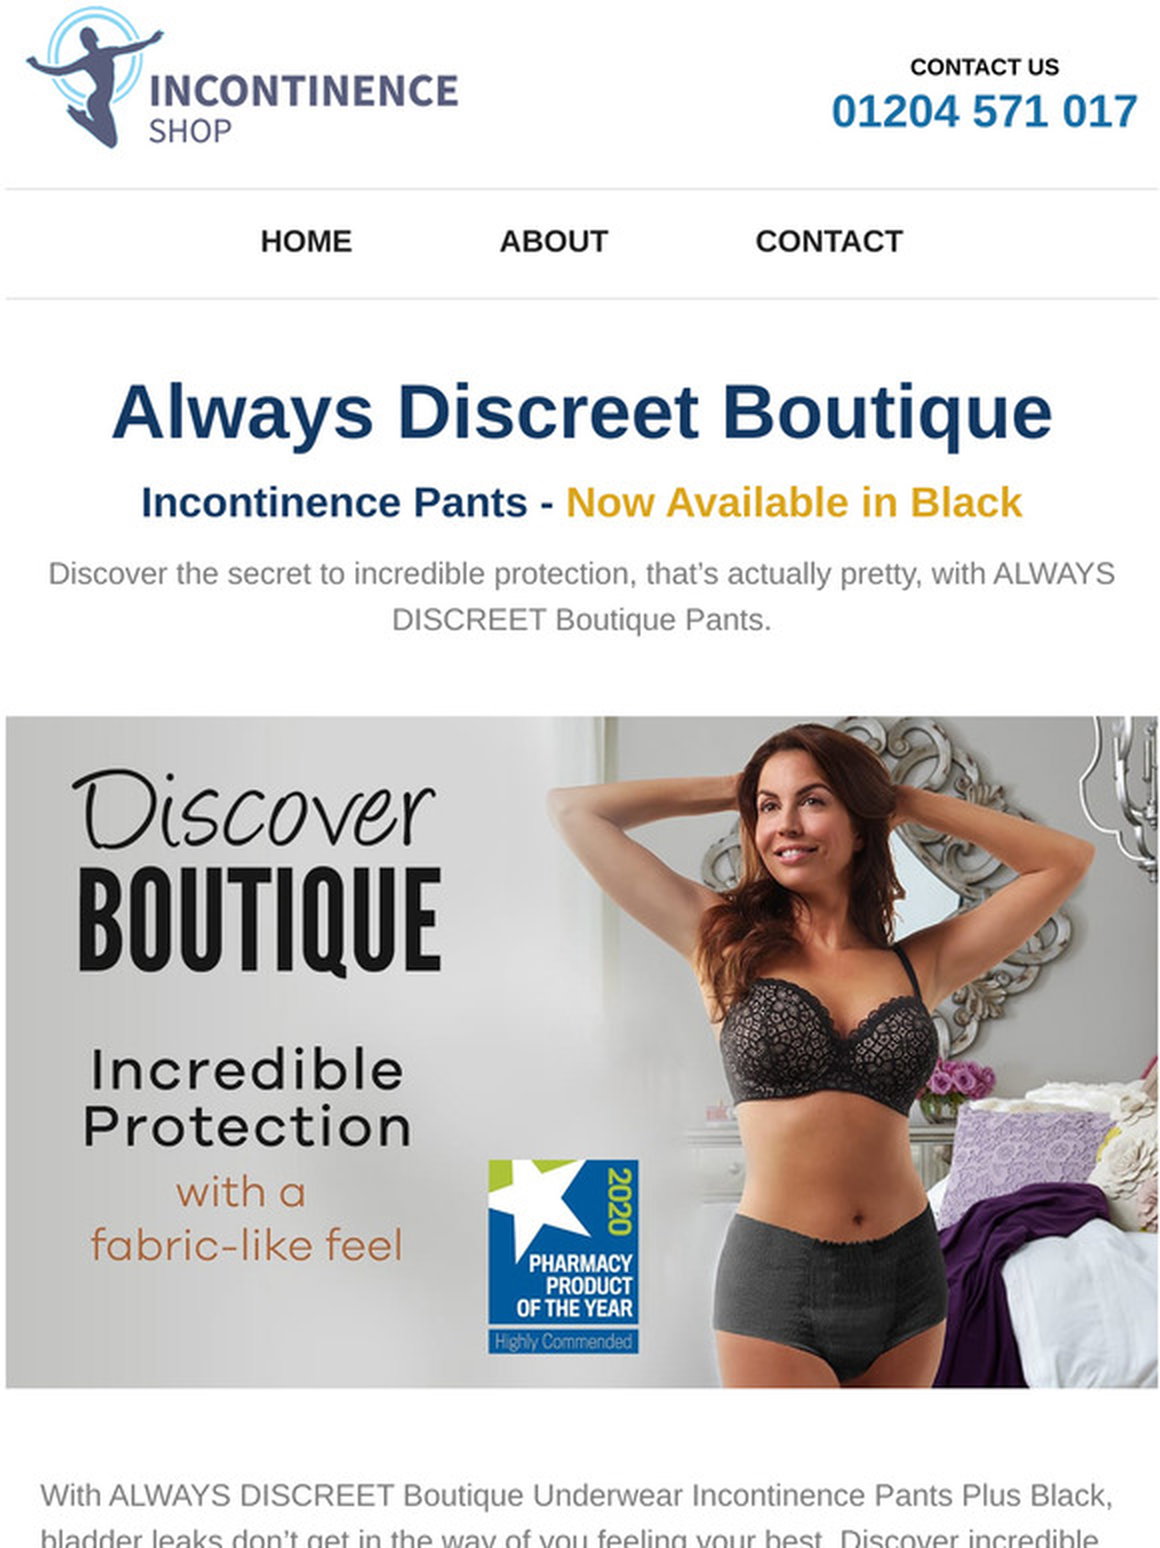 incontinenceshop.com: Incontinence Shop - New Always Discreet Boutique  Black